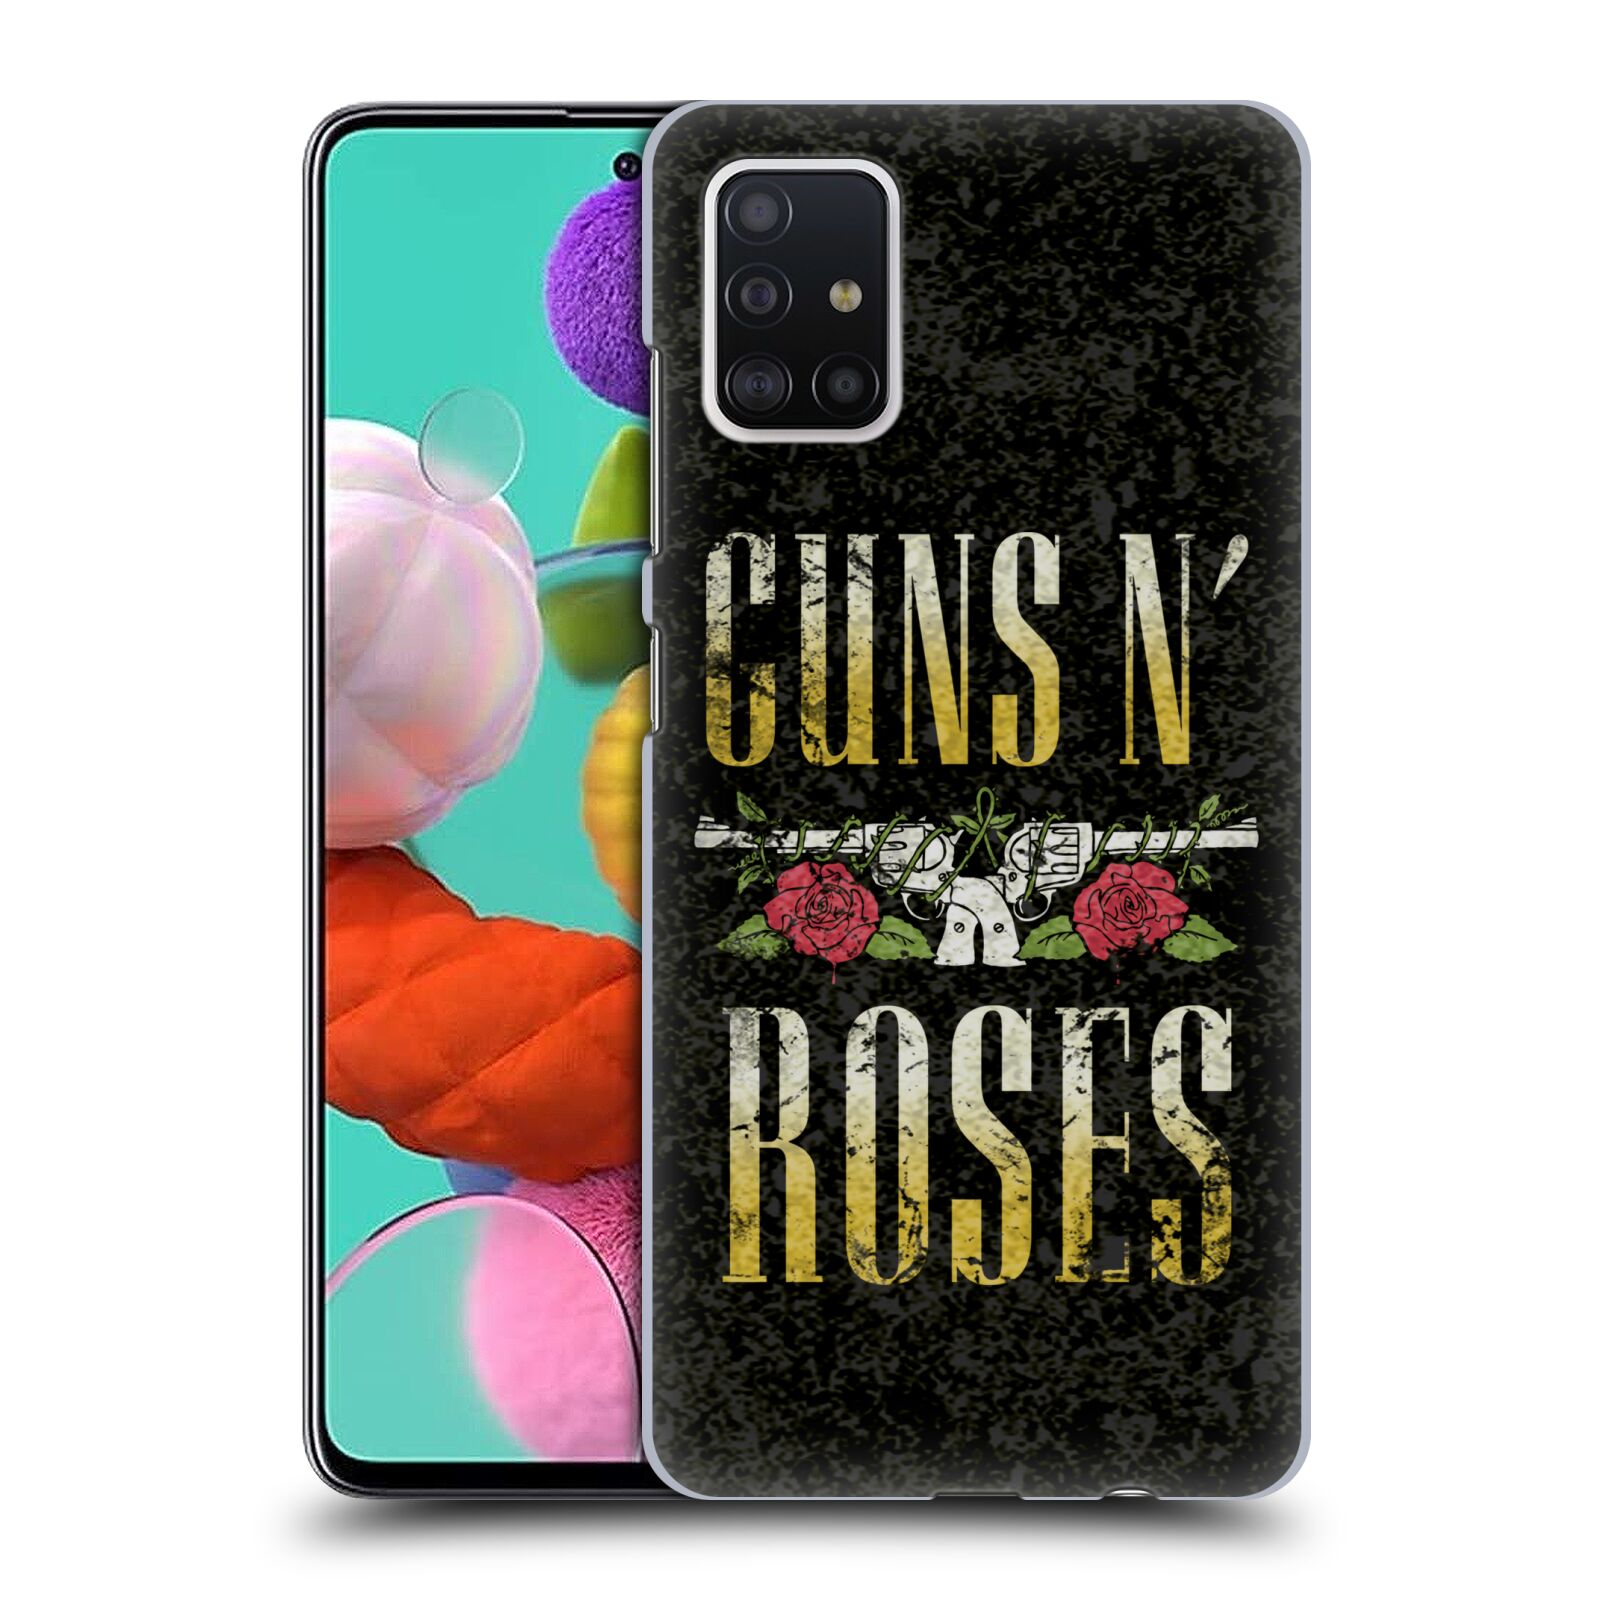 Pouzdro na mobil Samsung Galaxy A51 - HEAD CASE - hudební skupina Guns N Roses text